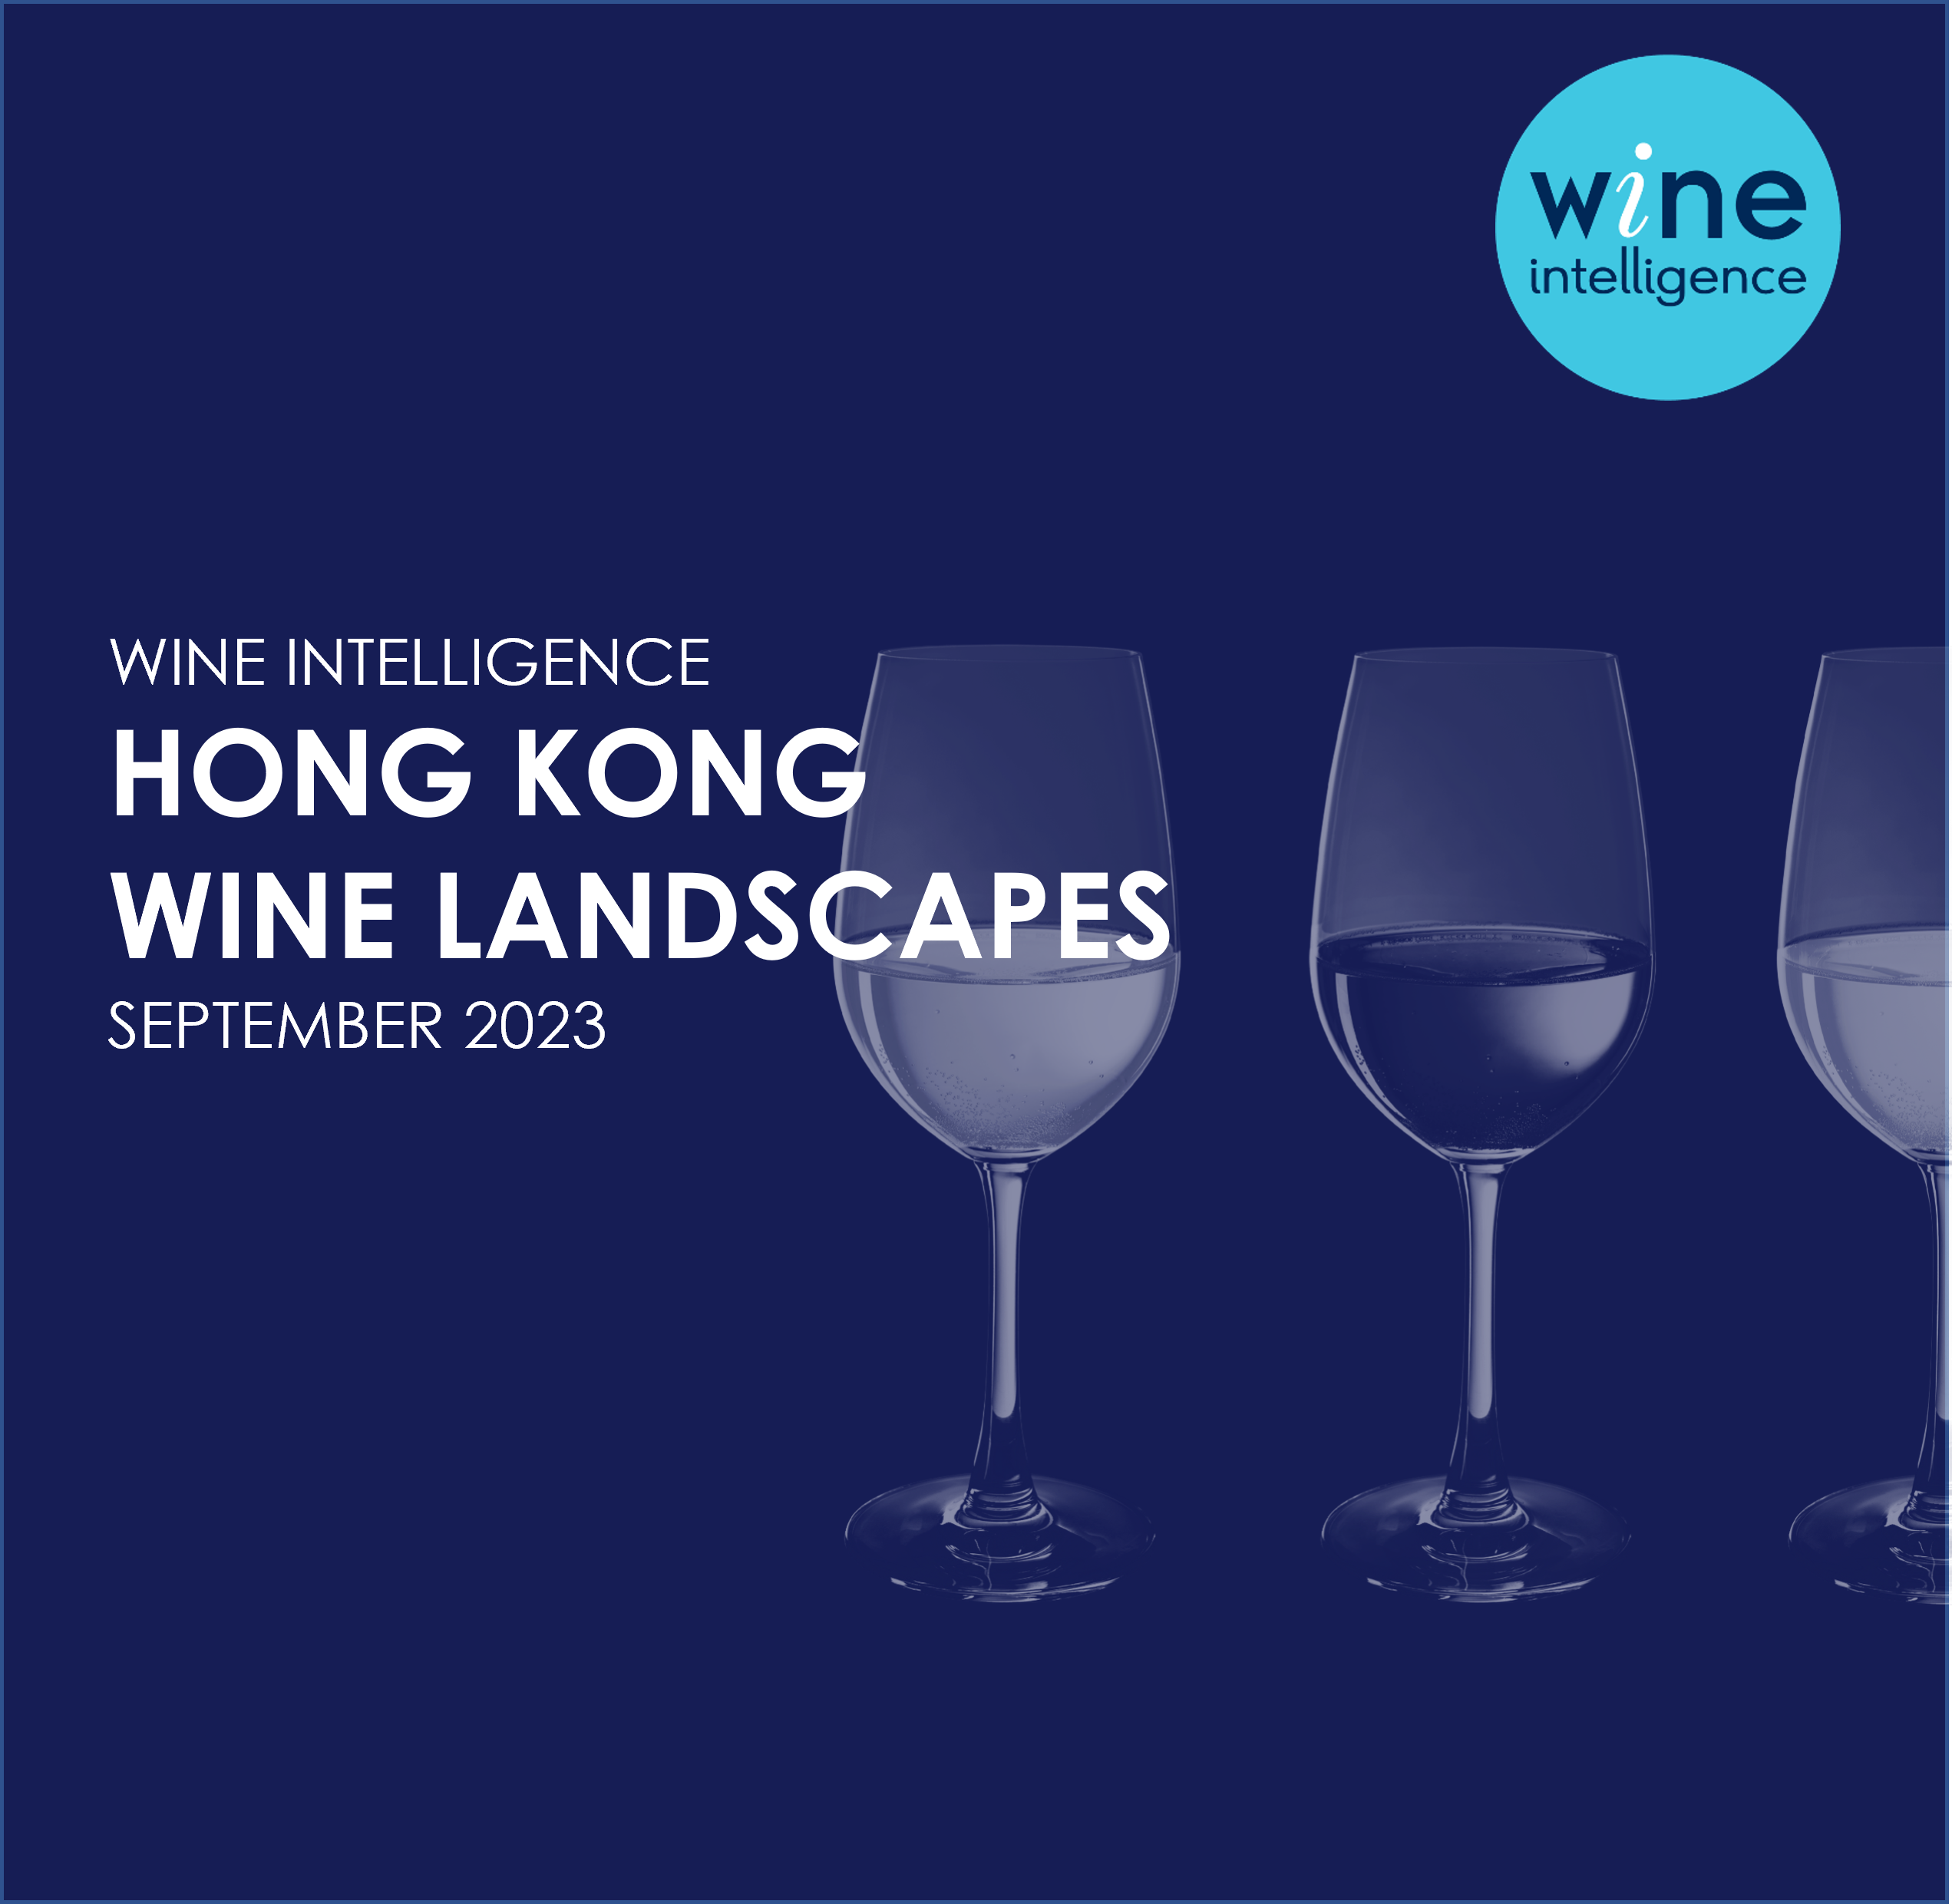 Hong Kong Wine Landscapes 2023 - Hong Kong Wine Landscapes Report 2023